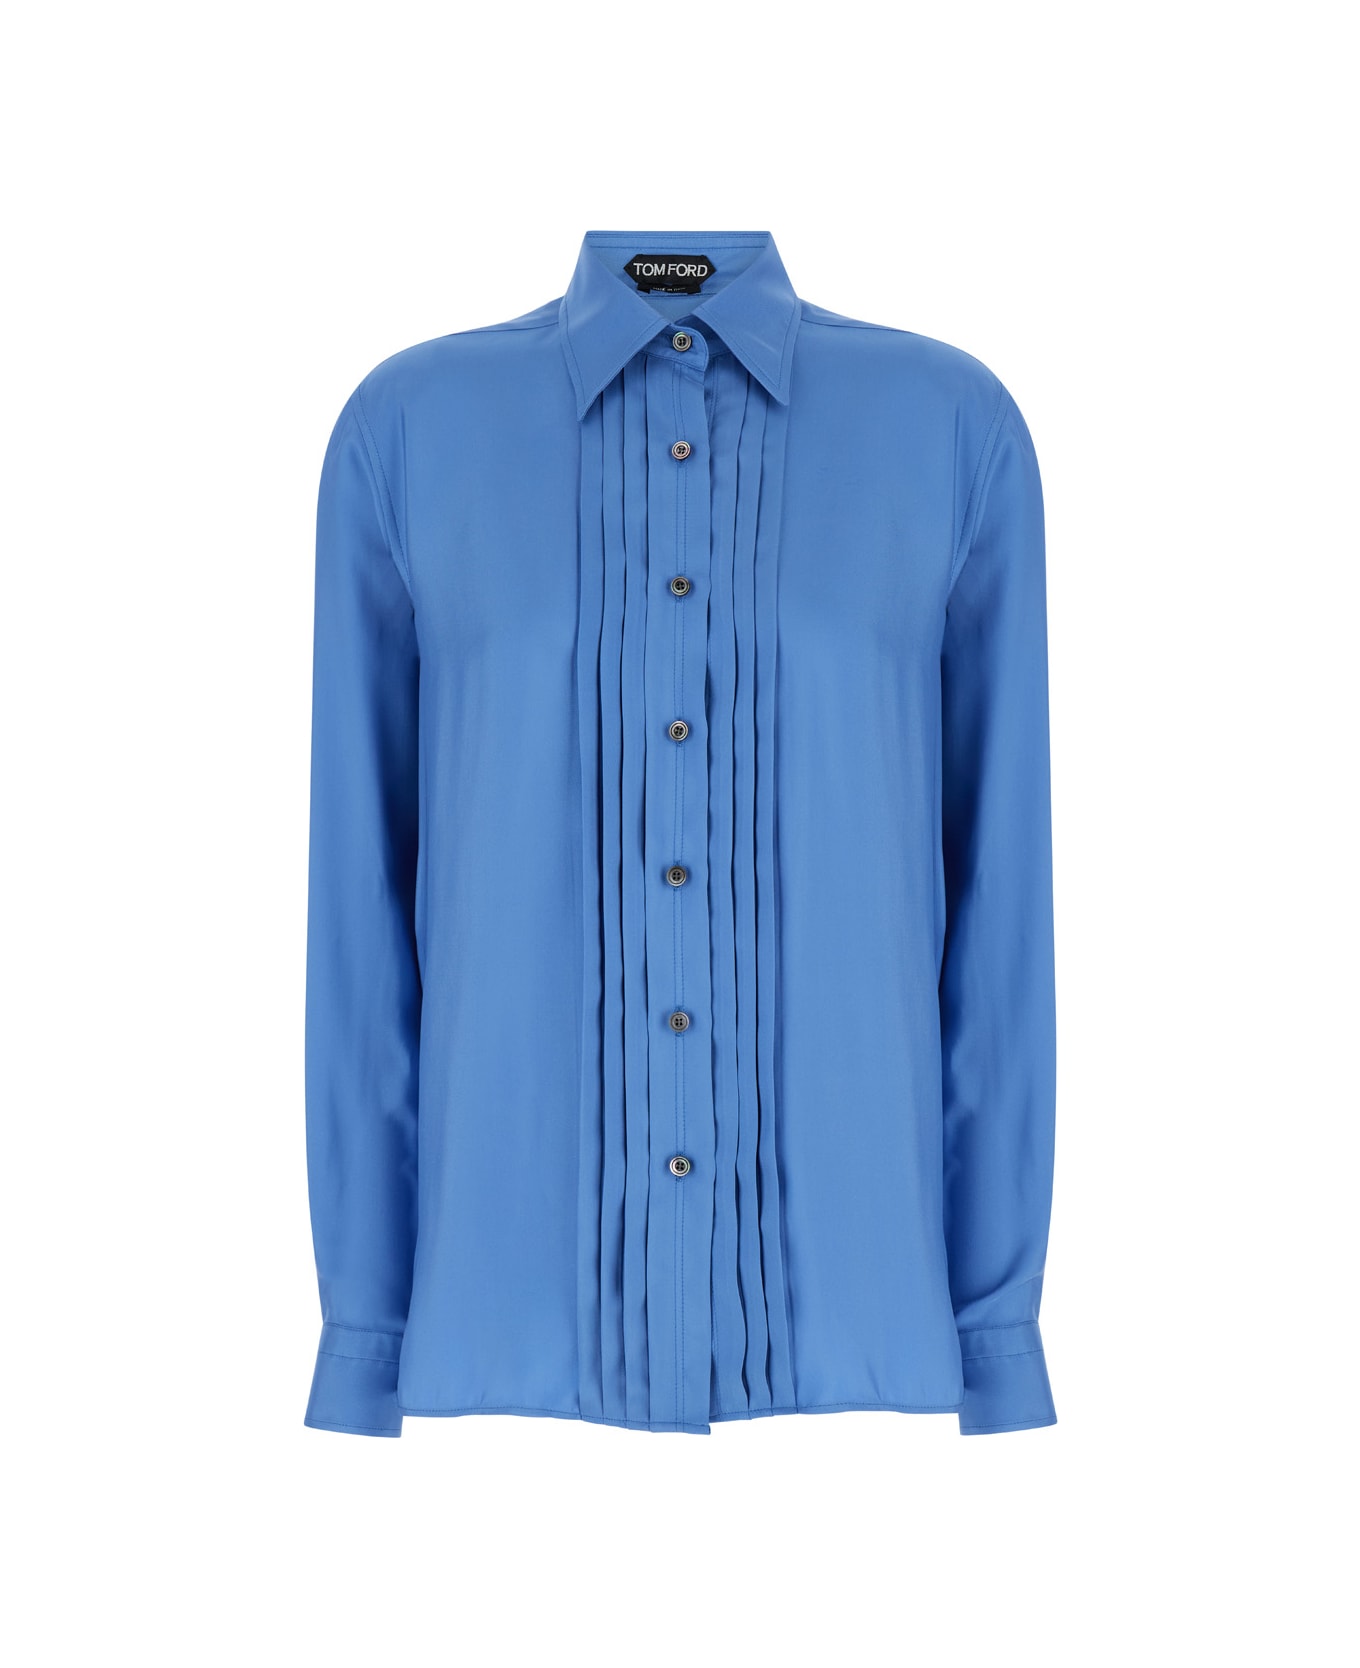 Tom Ford Pleated Plastron Shirt - Blu